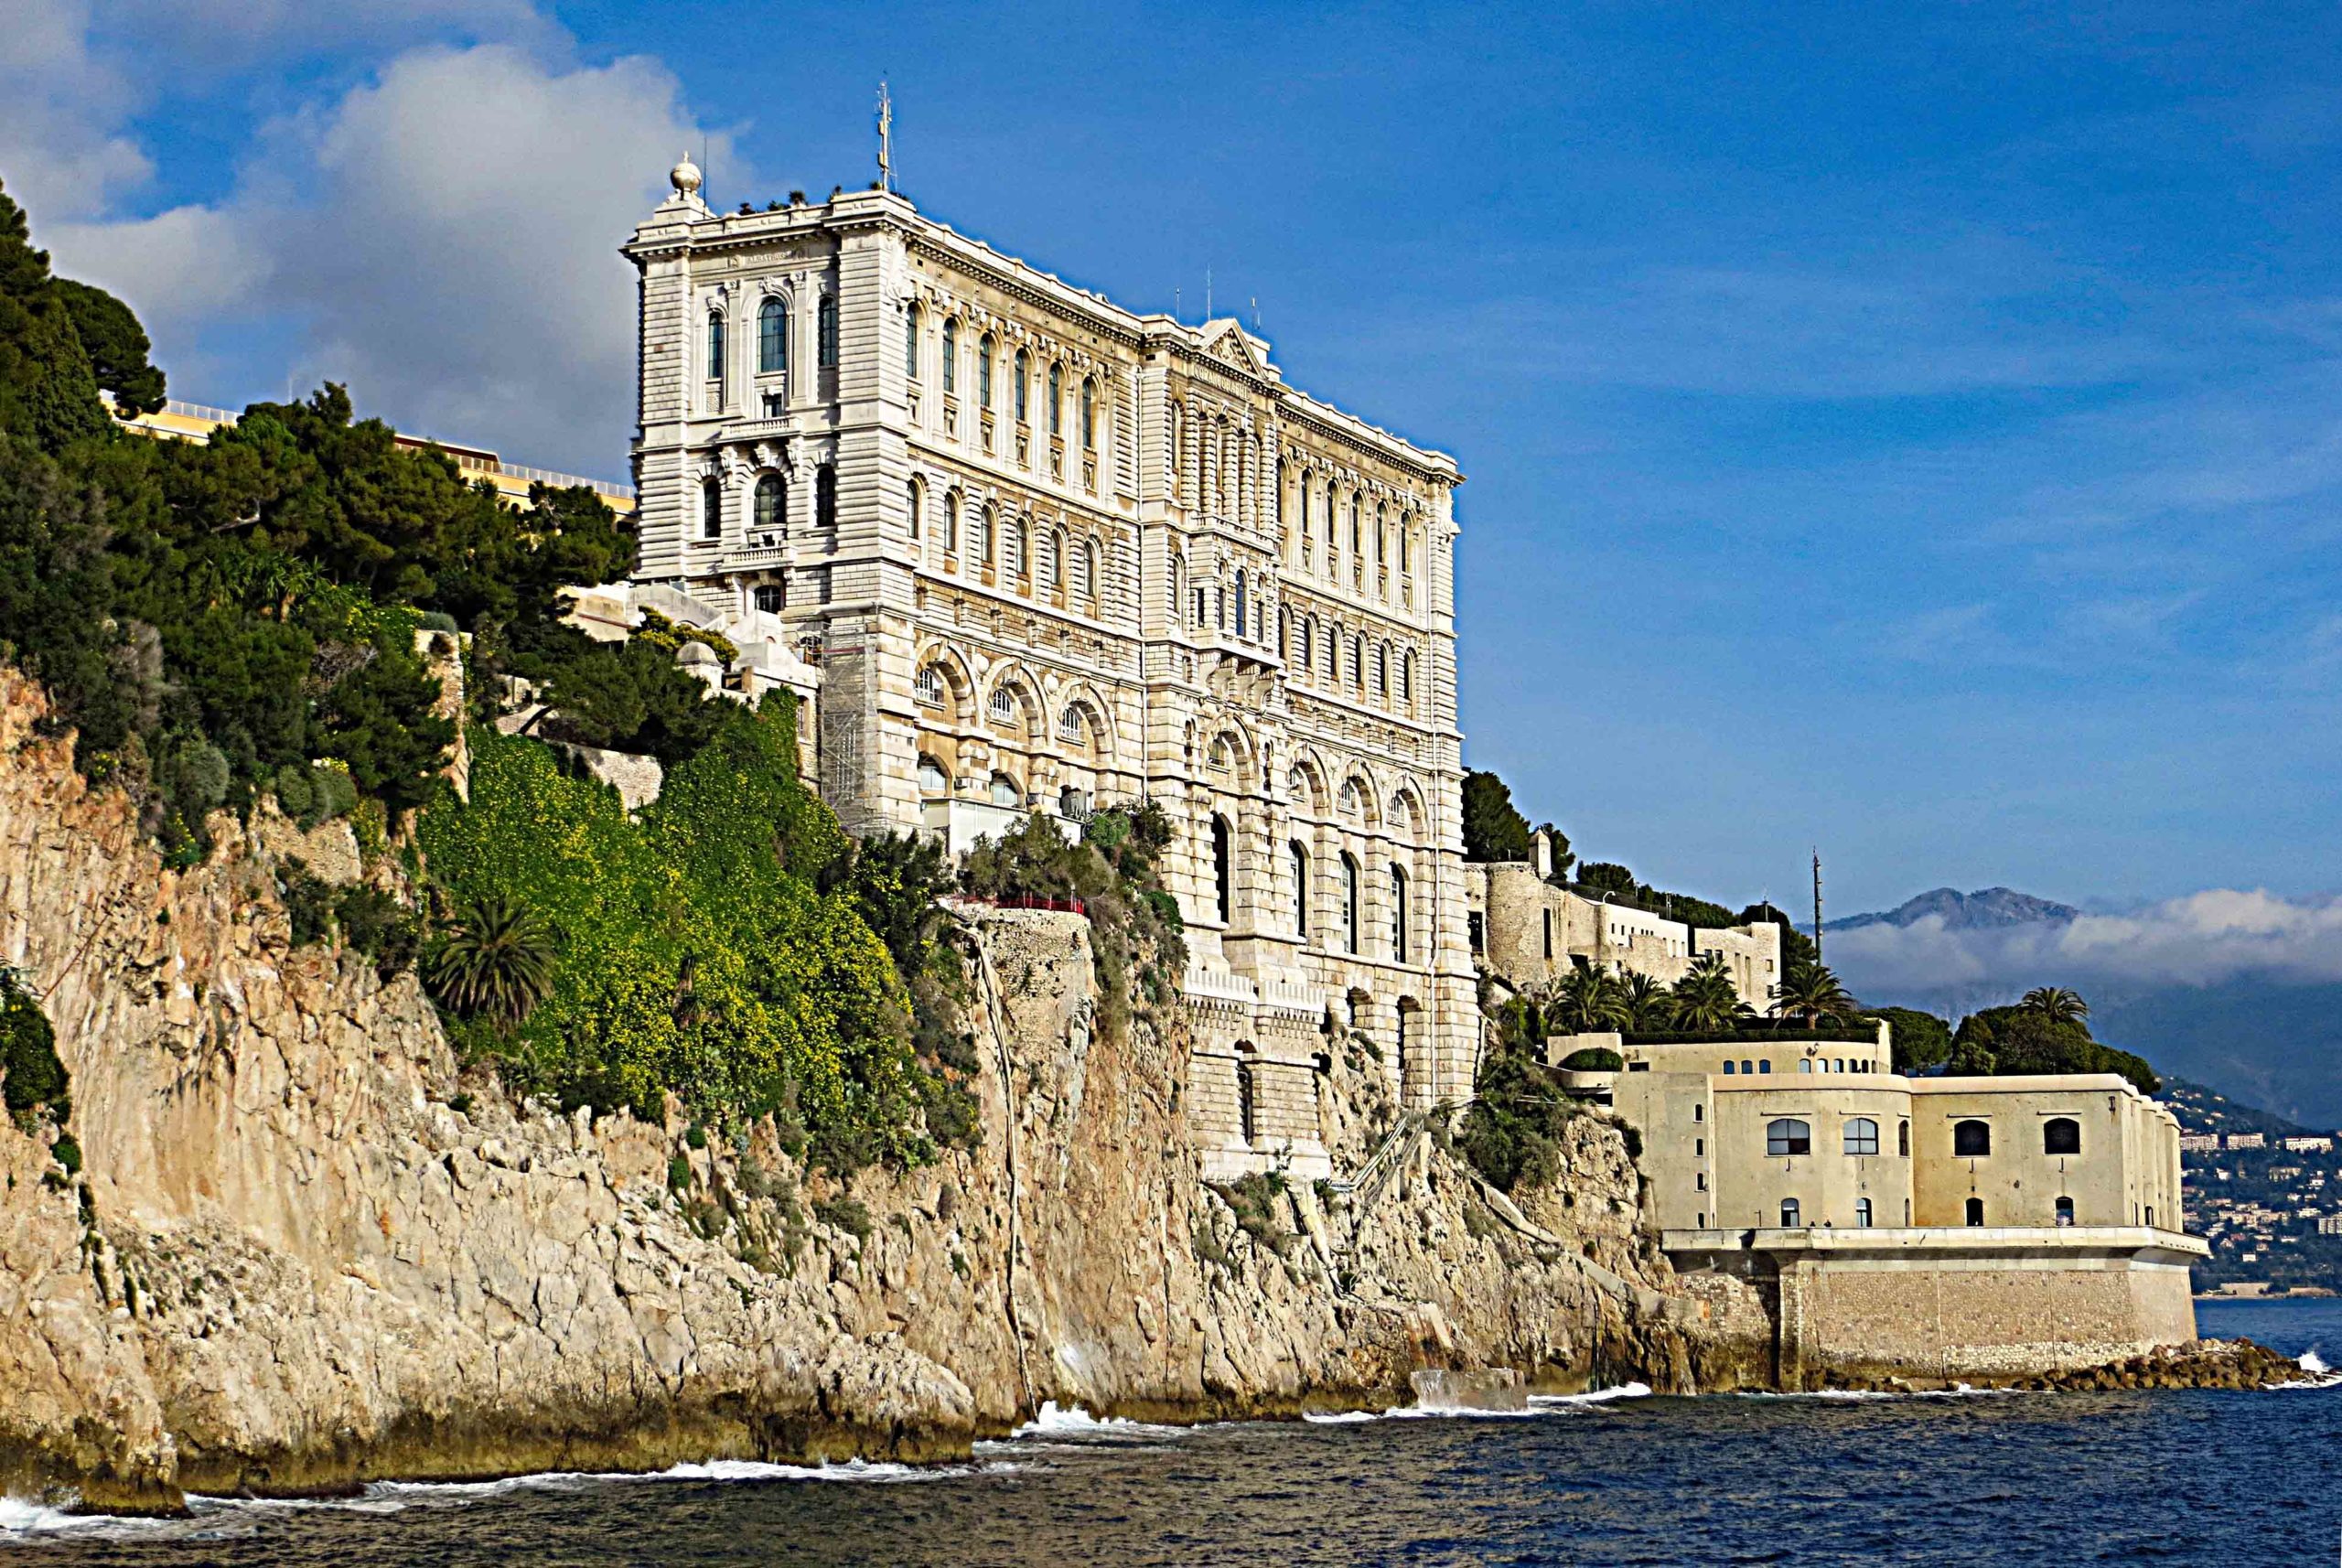 Monaco Oceanographic Museum - Rocher de Monaco © Mister No - licence [CC BY 3.0] from Wikimedia Commons